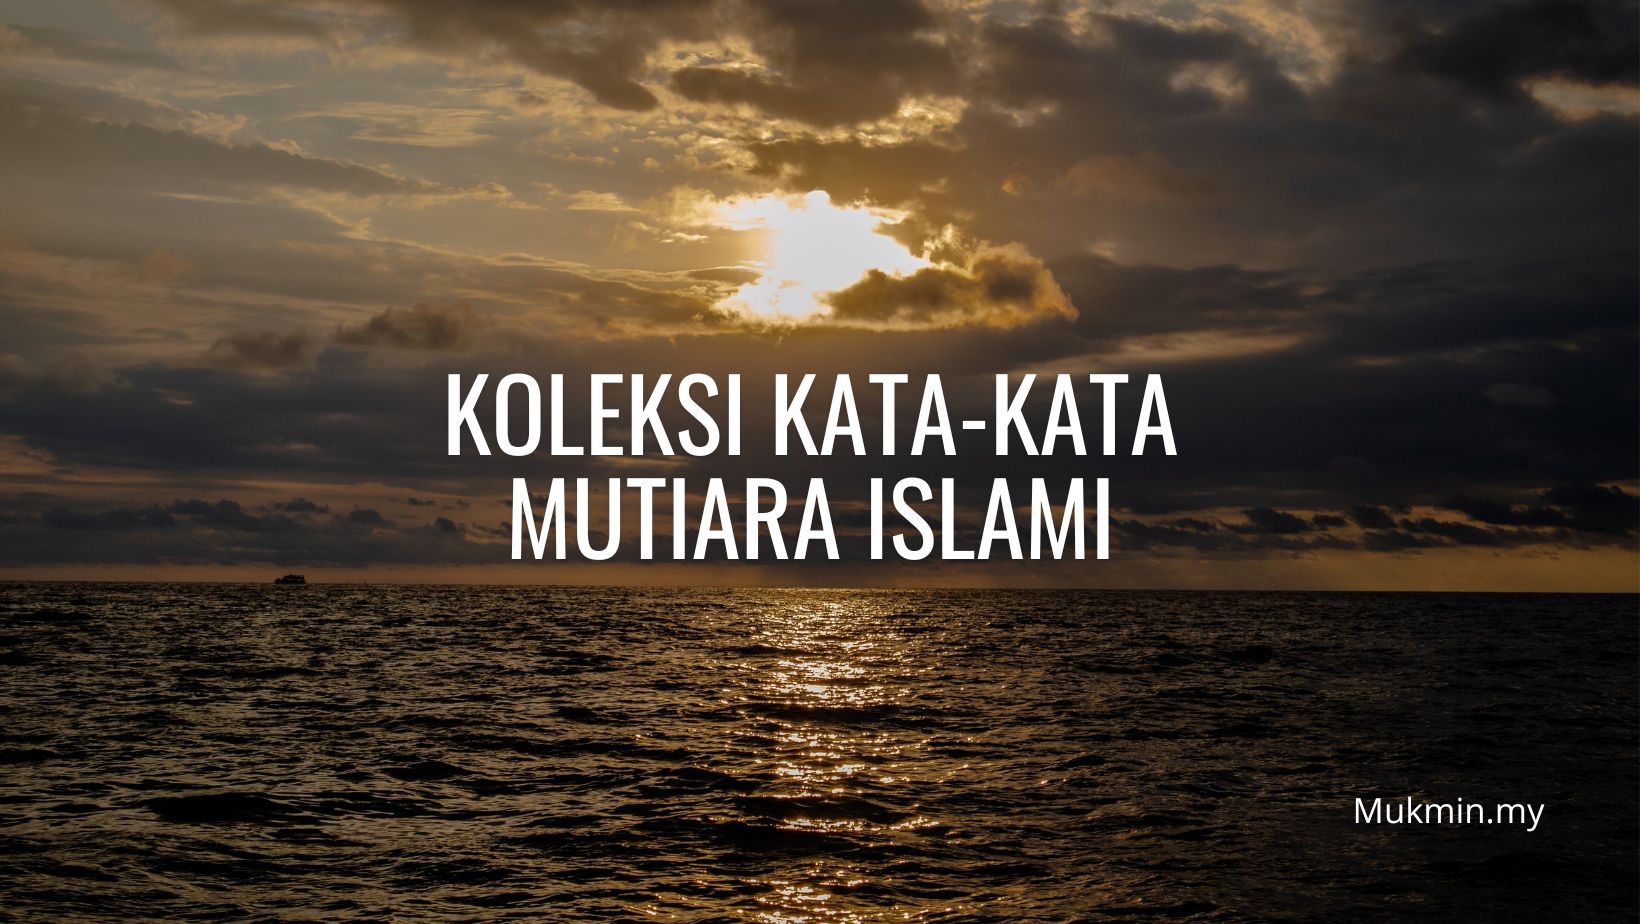 Koleksi kata-kata mutiara islami